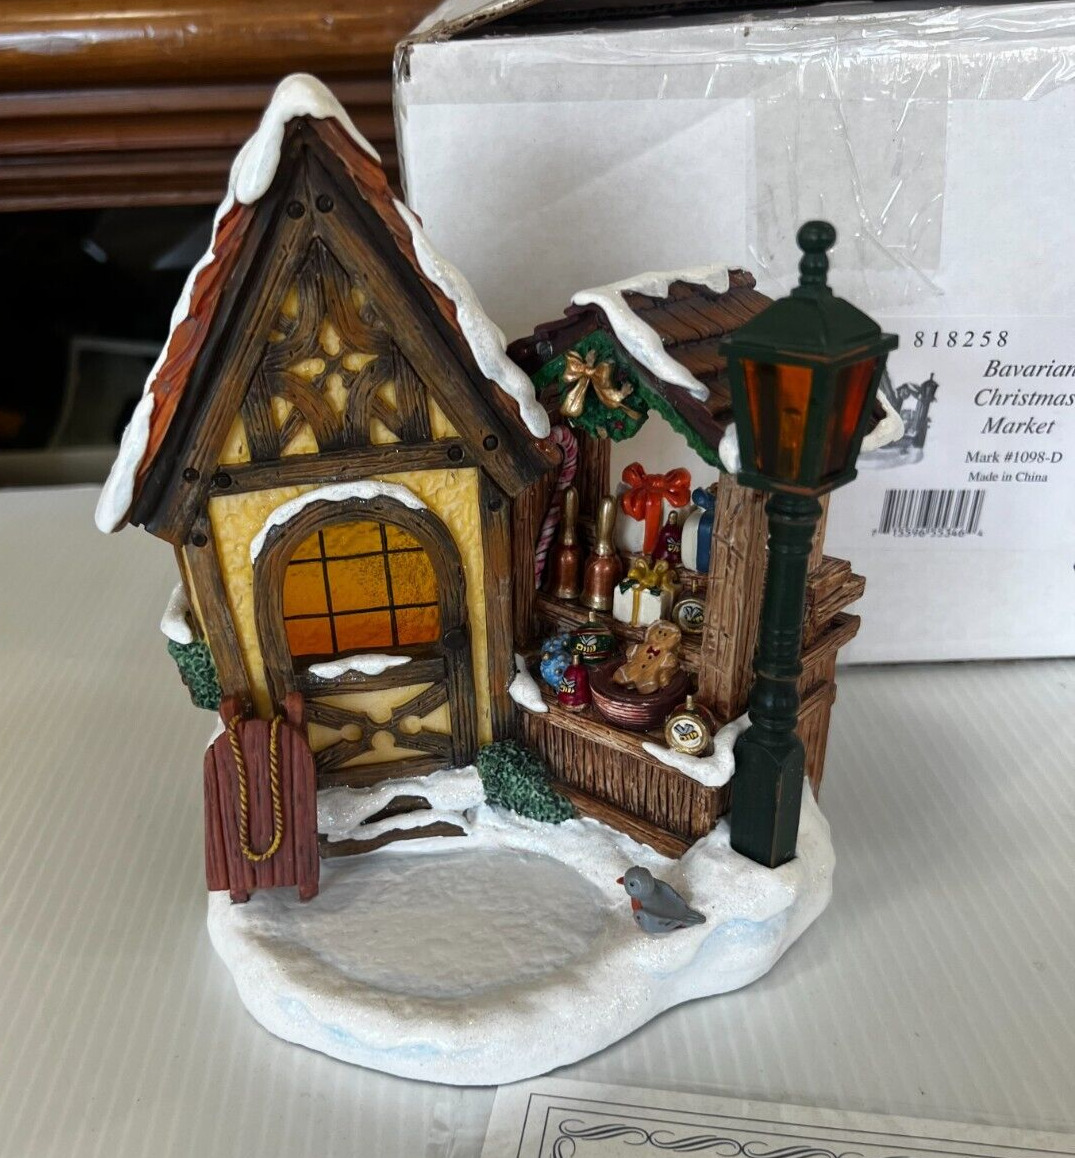 Goebel Bavarian Christmas Market 1098 - D with Box _Lighted Cottage Figurine